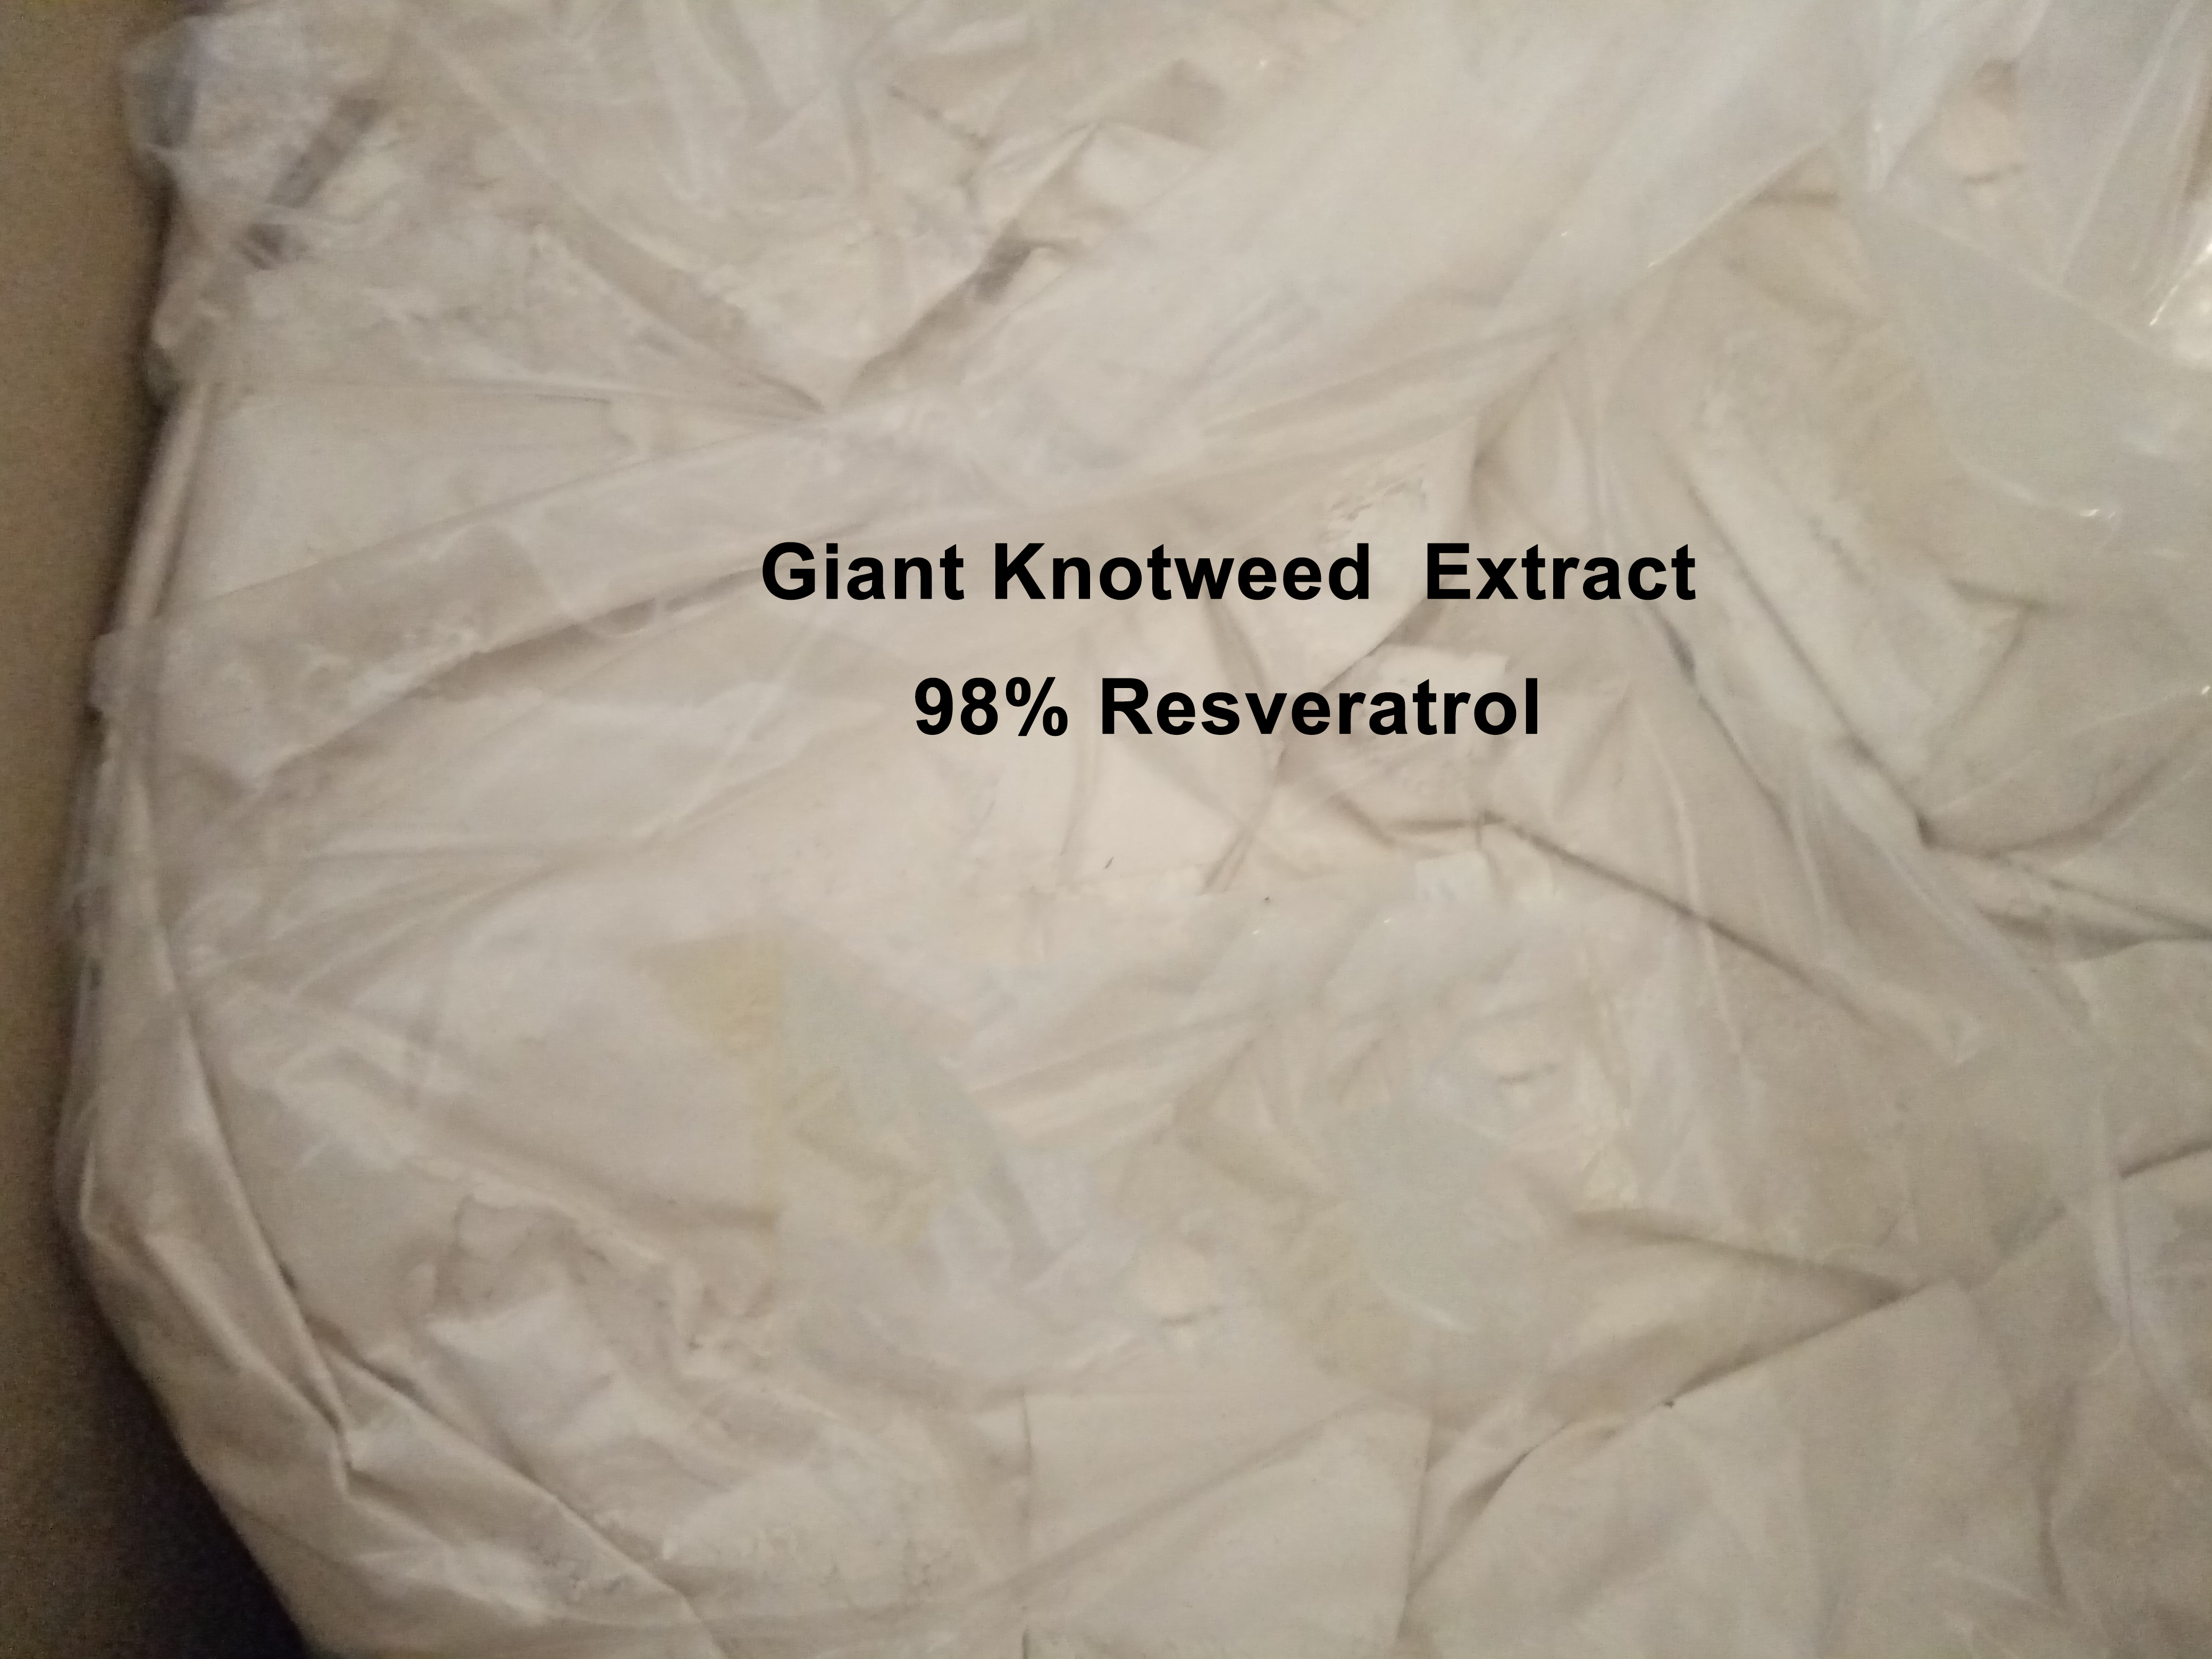 Giant Knotweed Extract 98% Resveratrol